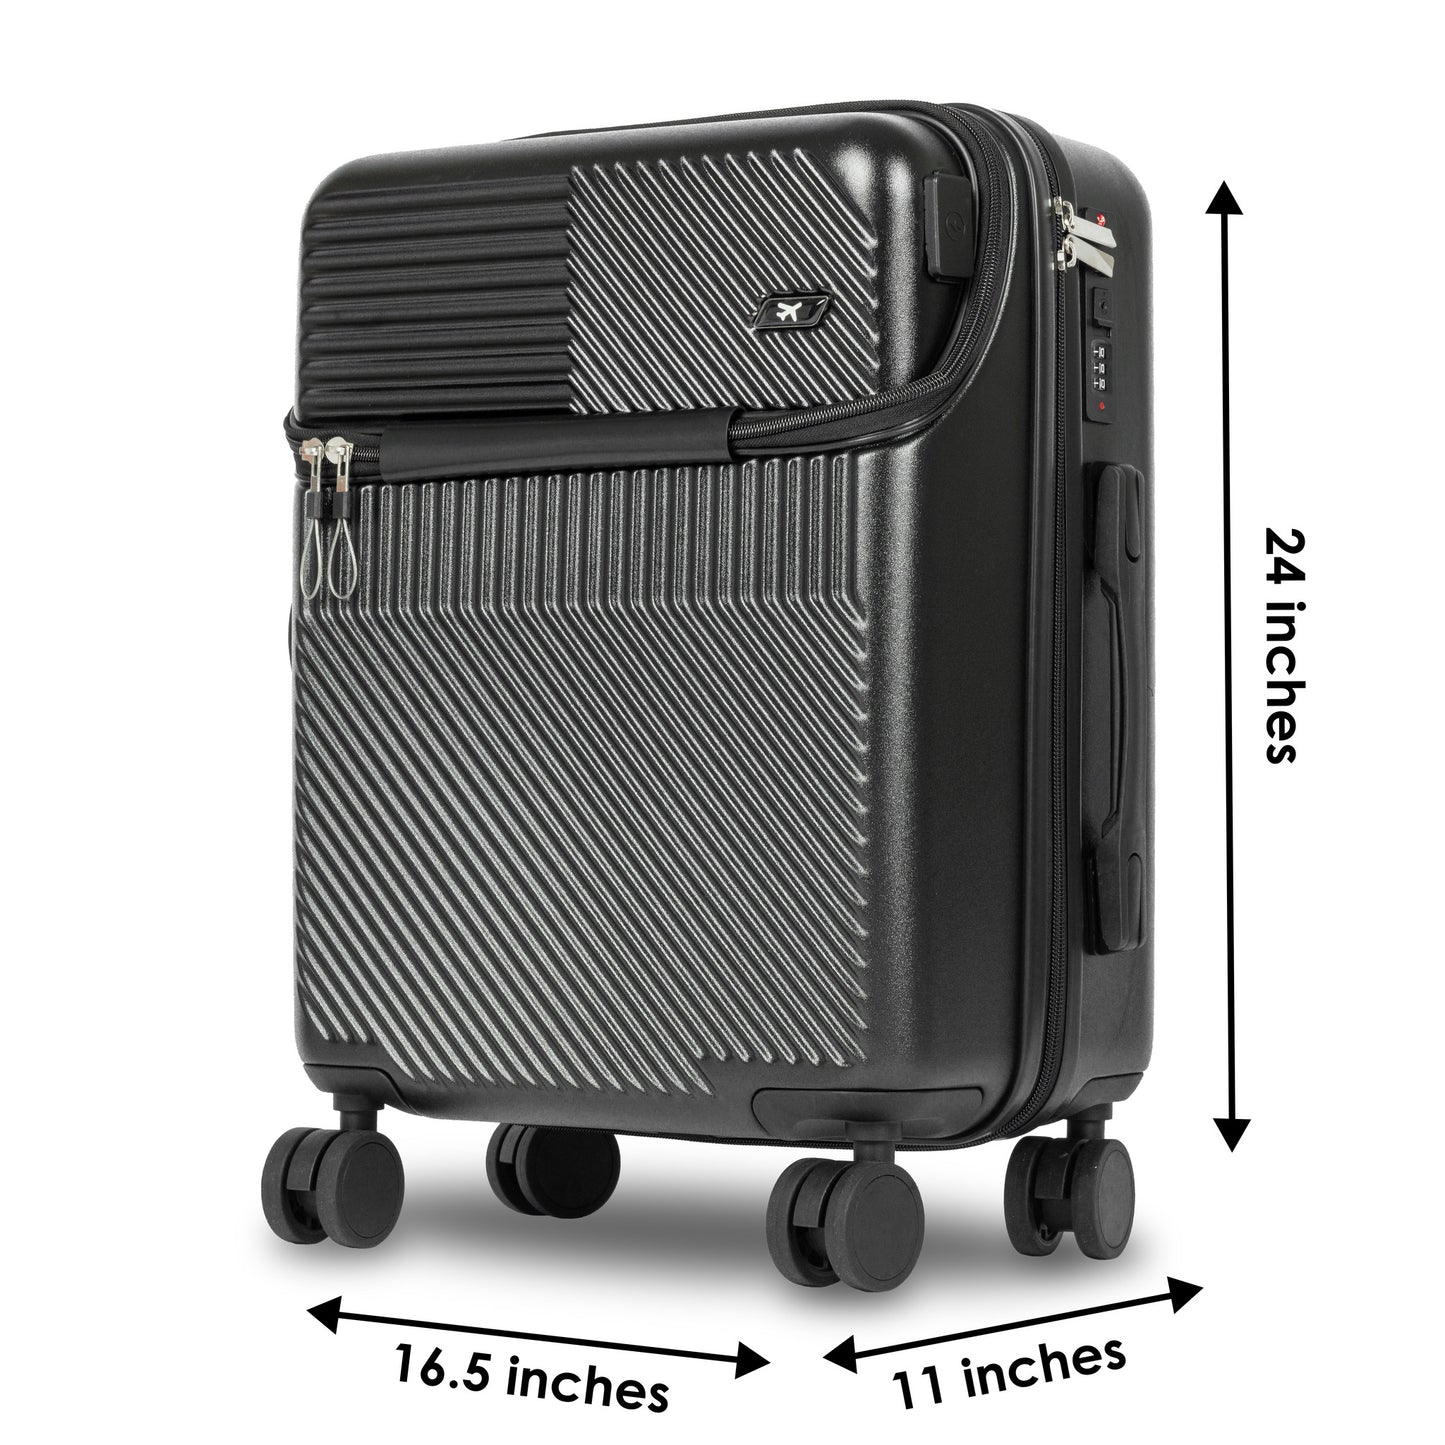 Ultimate Travel Companion: Premium 4-Wheeler Trolley Bag with 360° Rotation, TSA Lock, and Laptop Compatibility tynimo